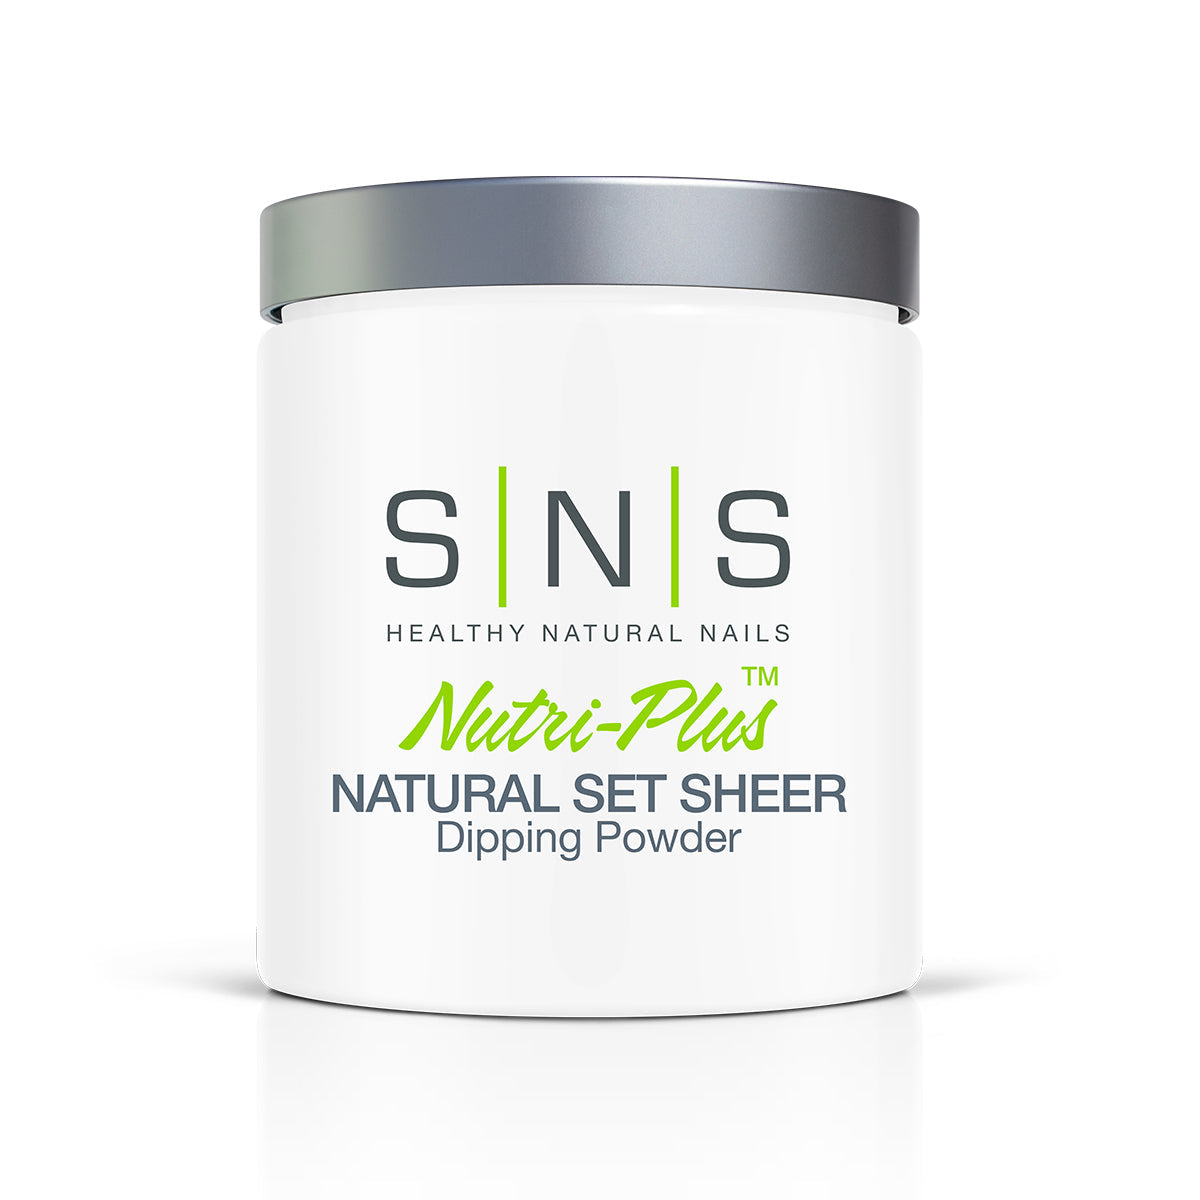 SNS Nutri-Plus French Dipping Powder Natural Set Sheer 448g packaging